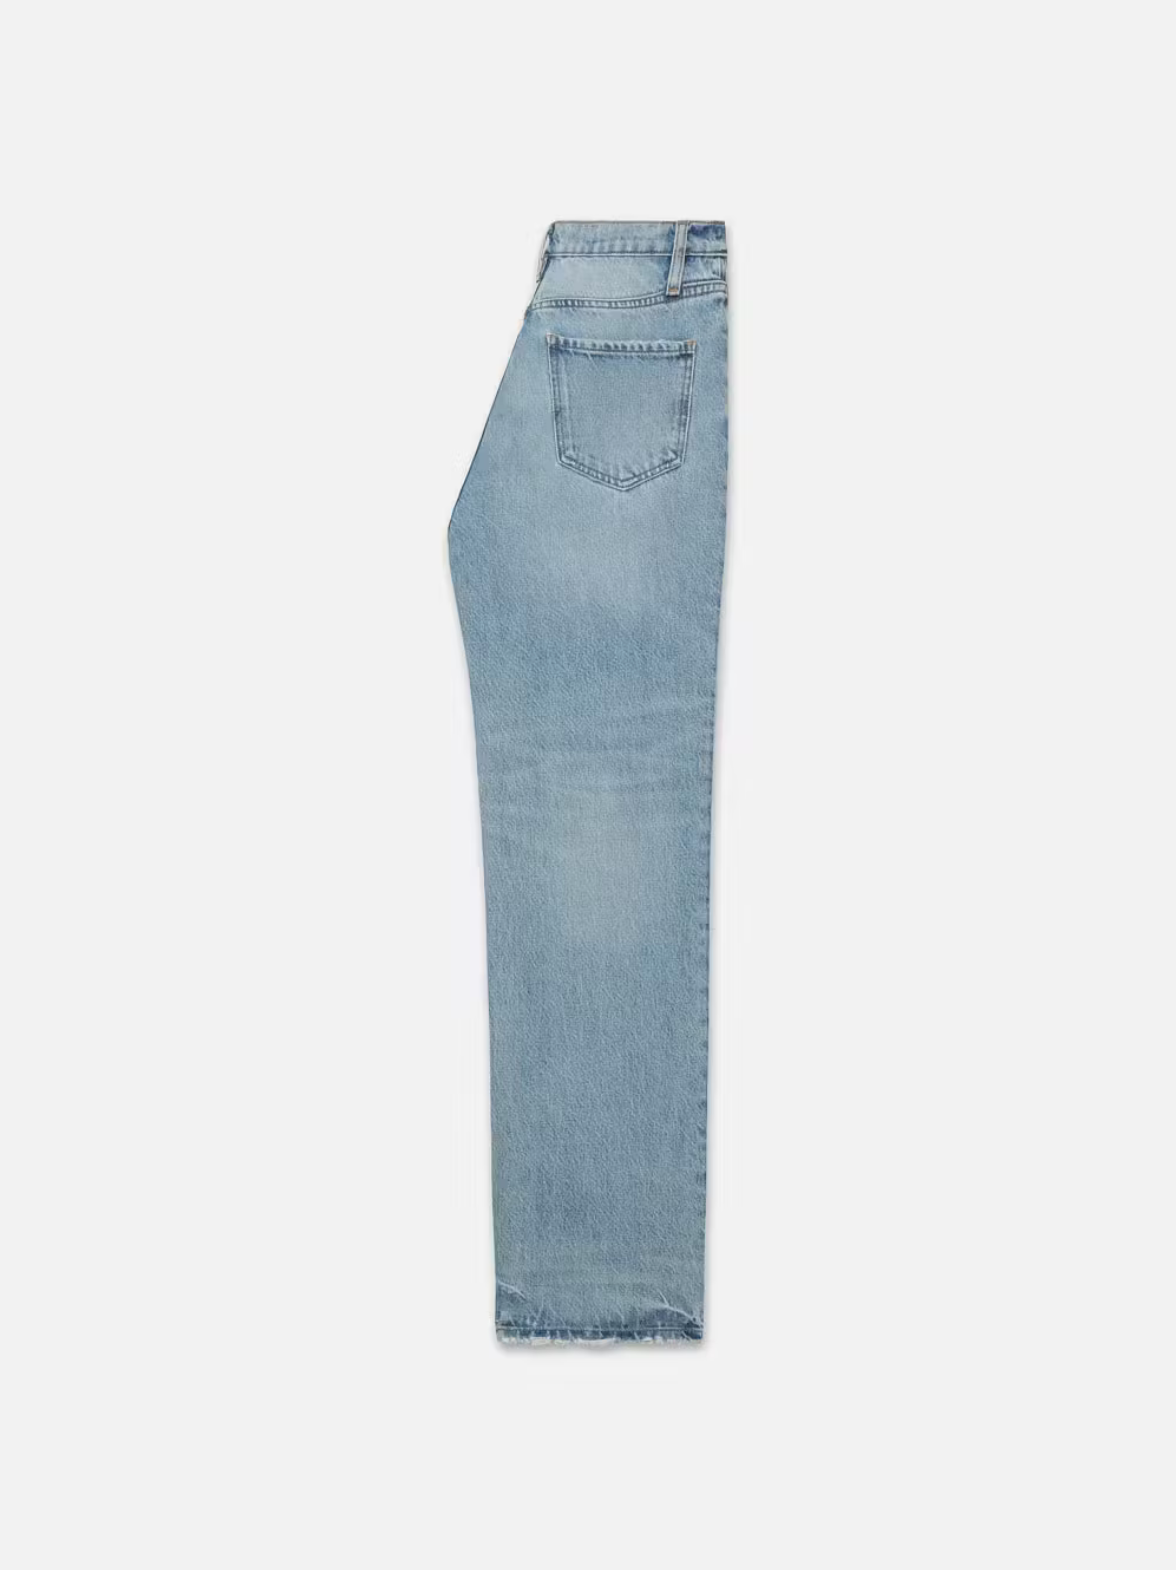 High waist straight leg jeans in light blue wash